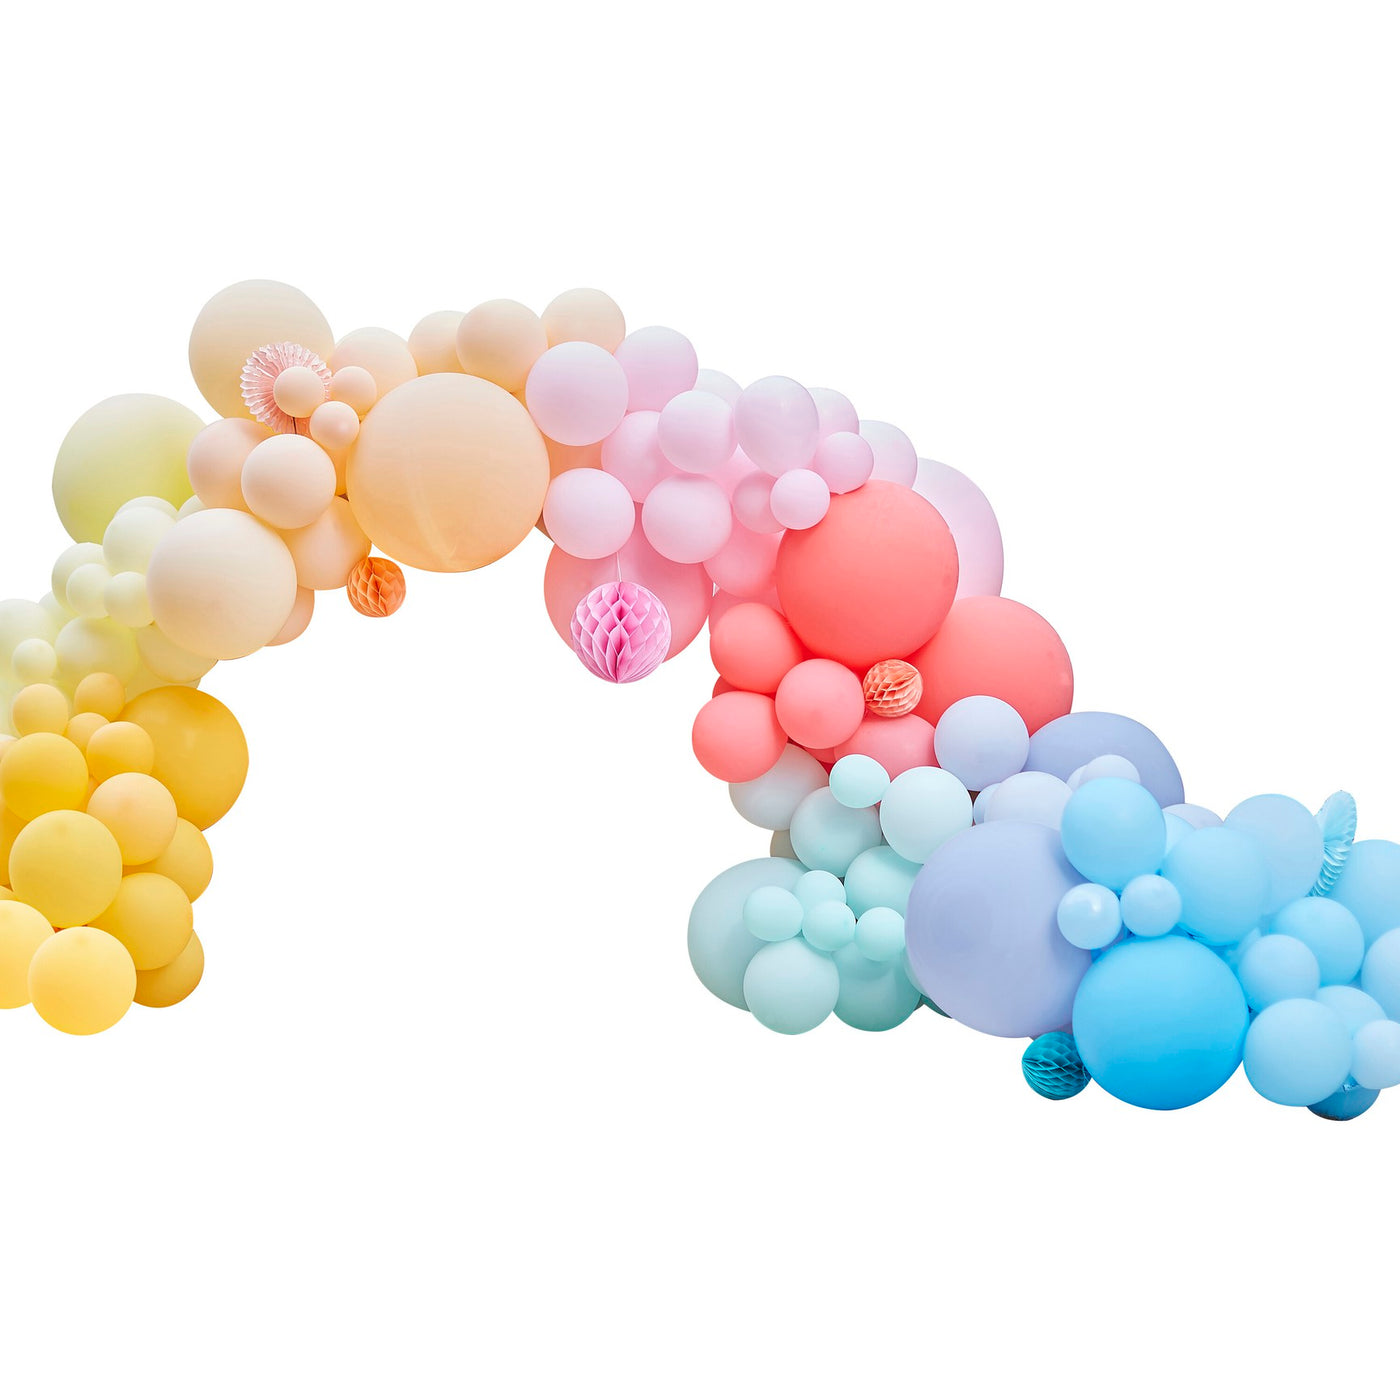 Ballongirlande Regenbogenfarben Pastell, DIY, 200 Ballons inkl. Ballonband